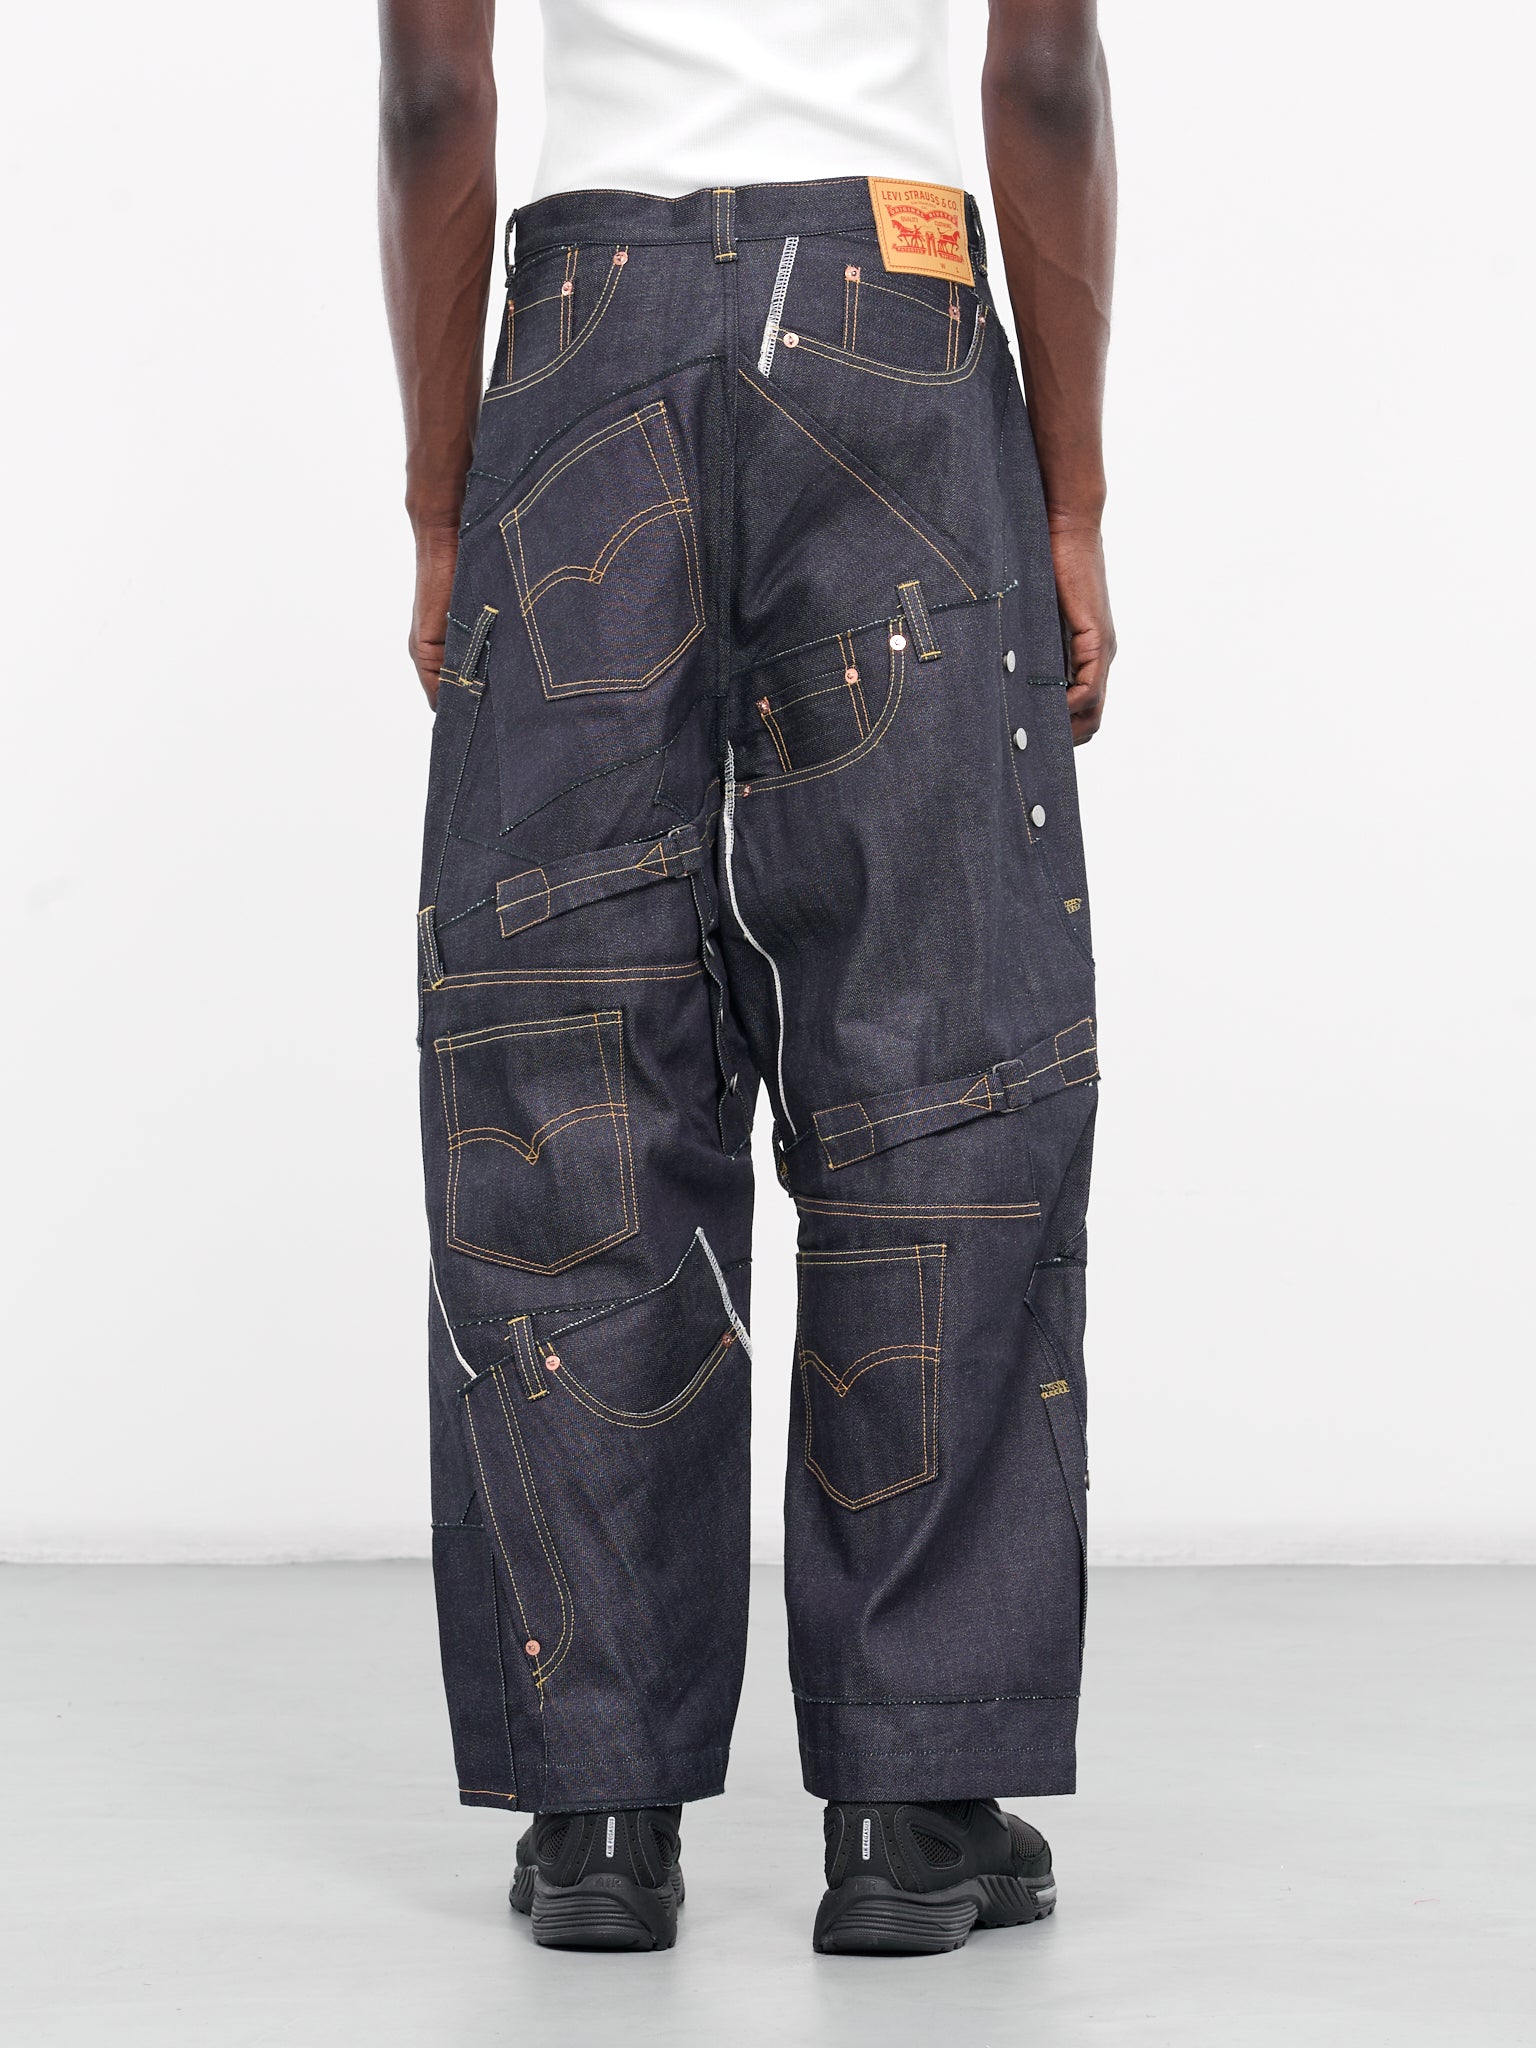 Levi's Deconstructed Jeans (WM-P201-051-INDIGO)